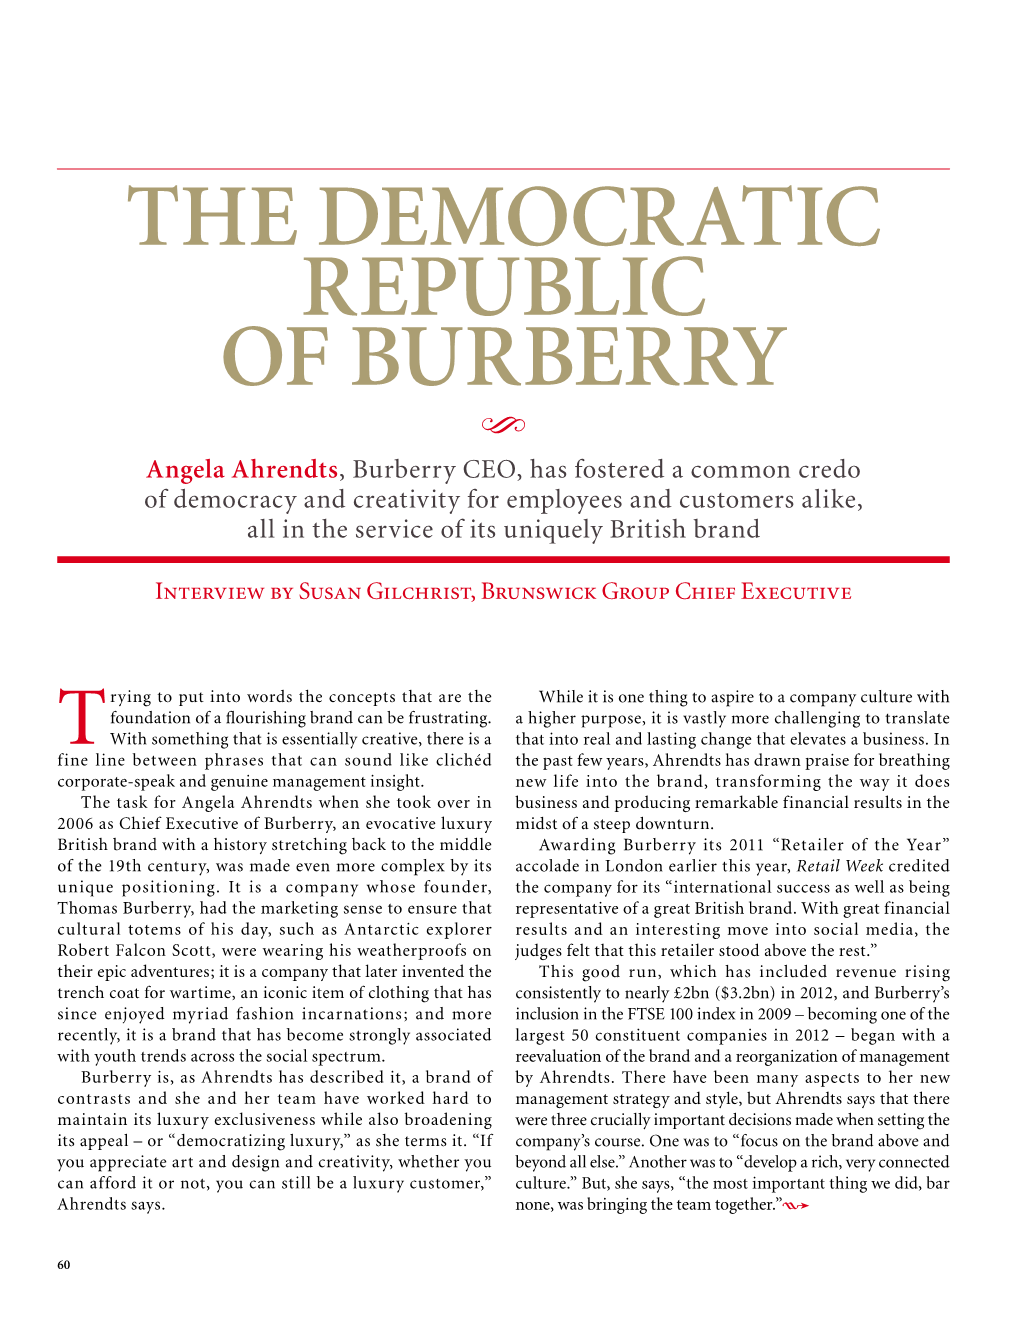 The Democratic Republic of Burberry